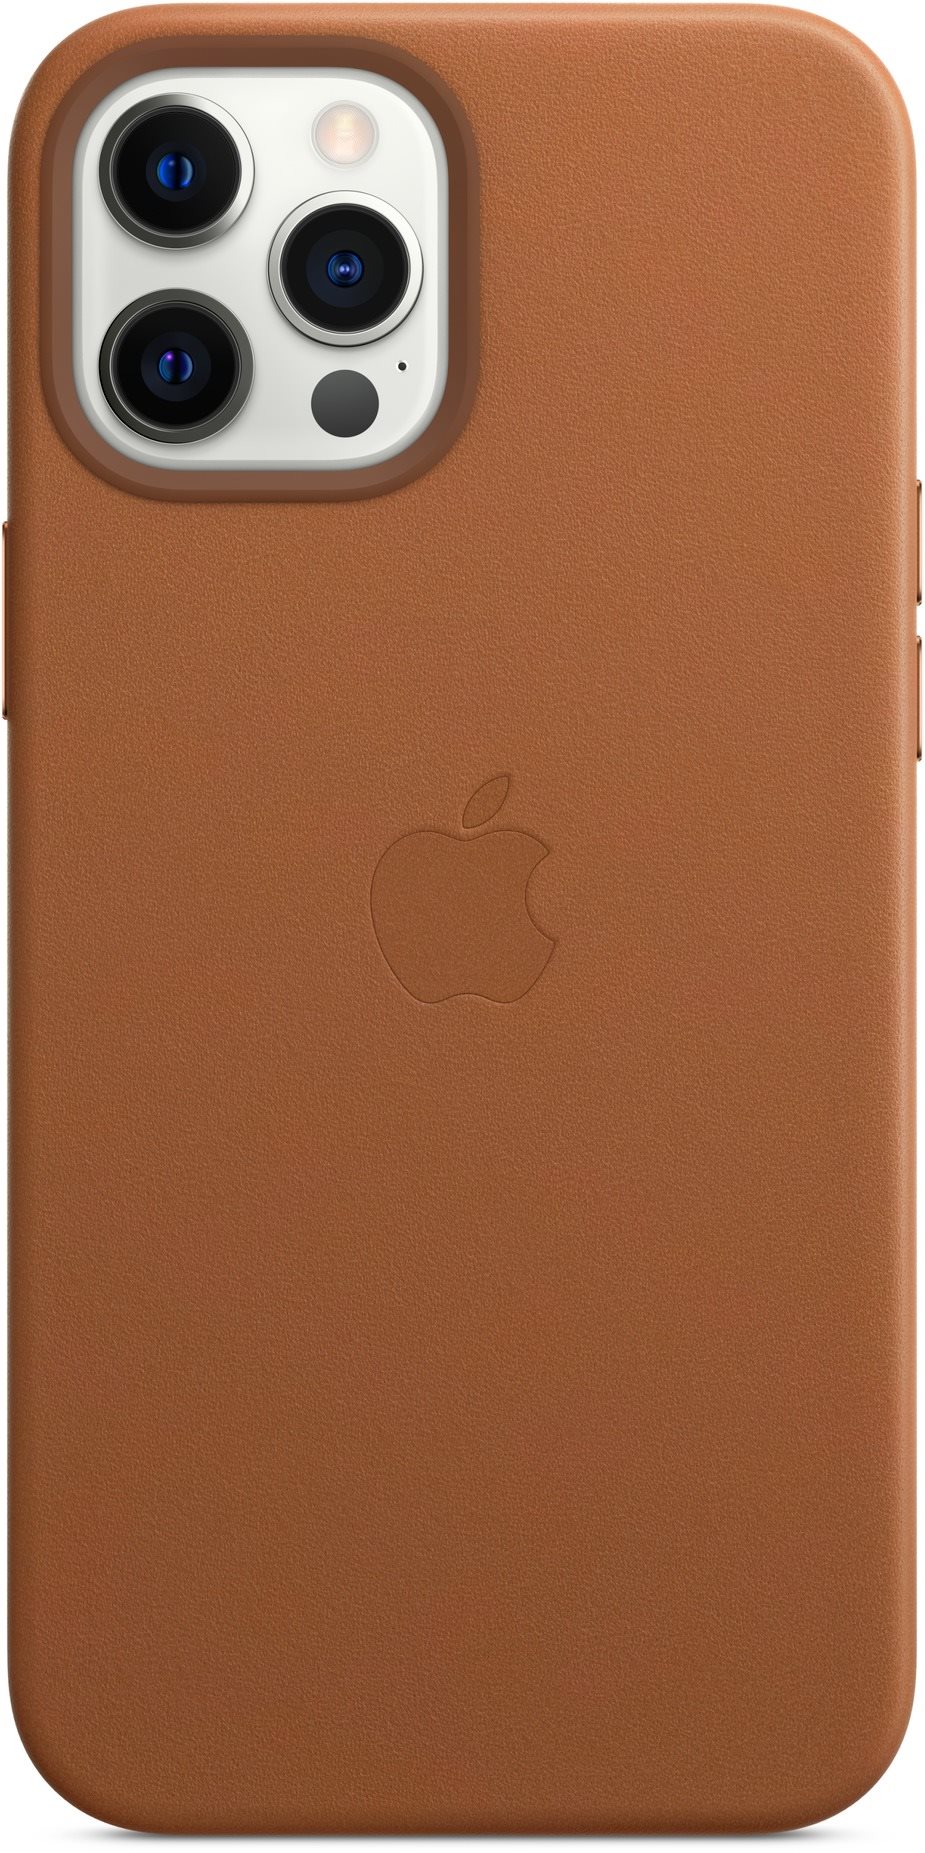 Apple iPhone 12 Pro Max vörösesbarna bőr MagSafe tok